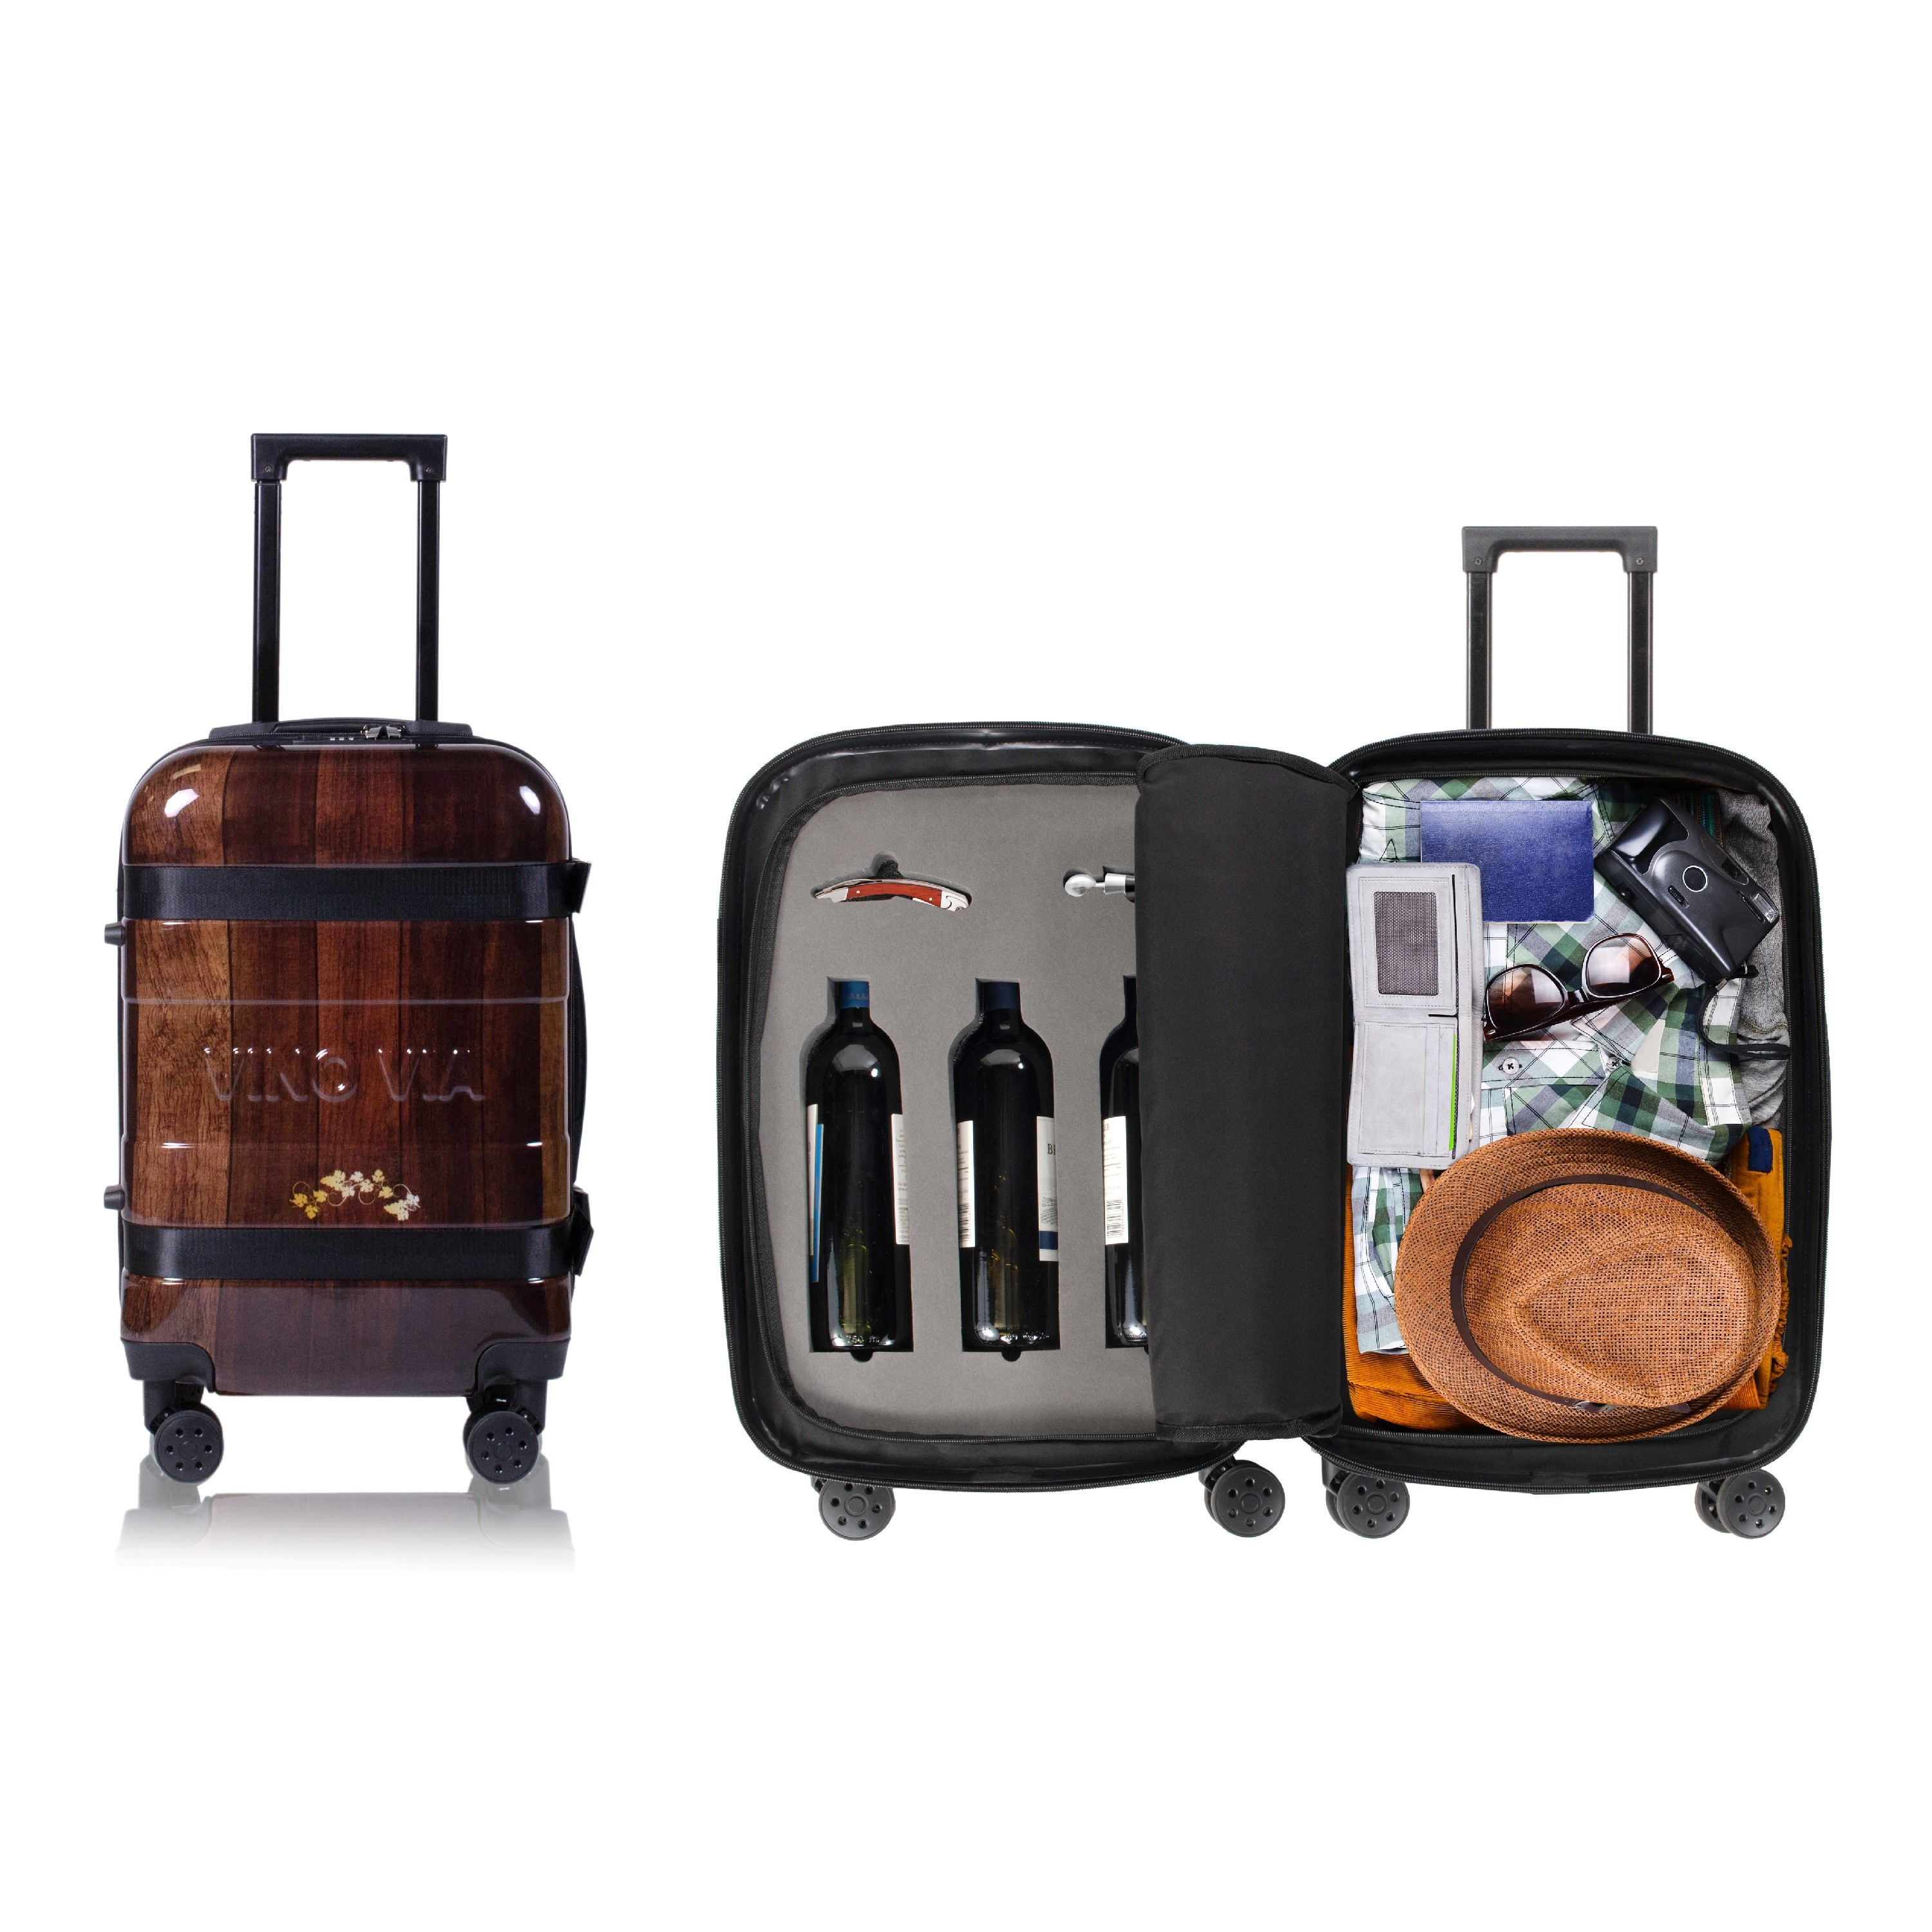 Prima USA The Six 6-Bottle Wine Luggage